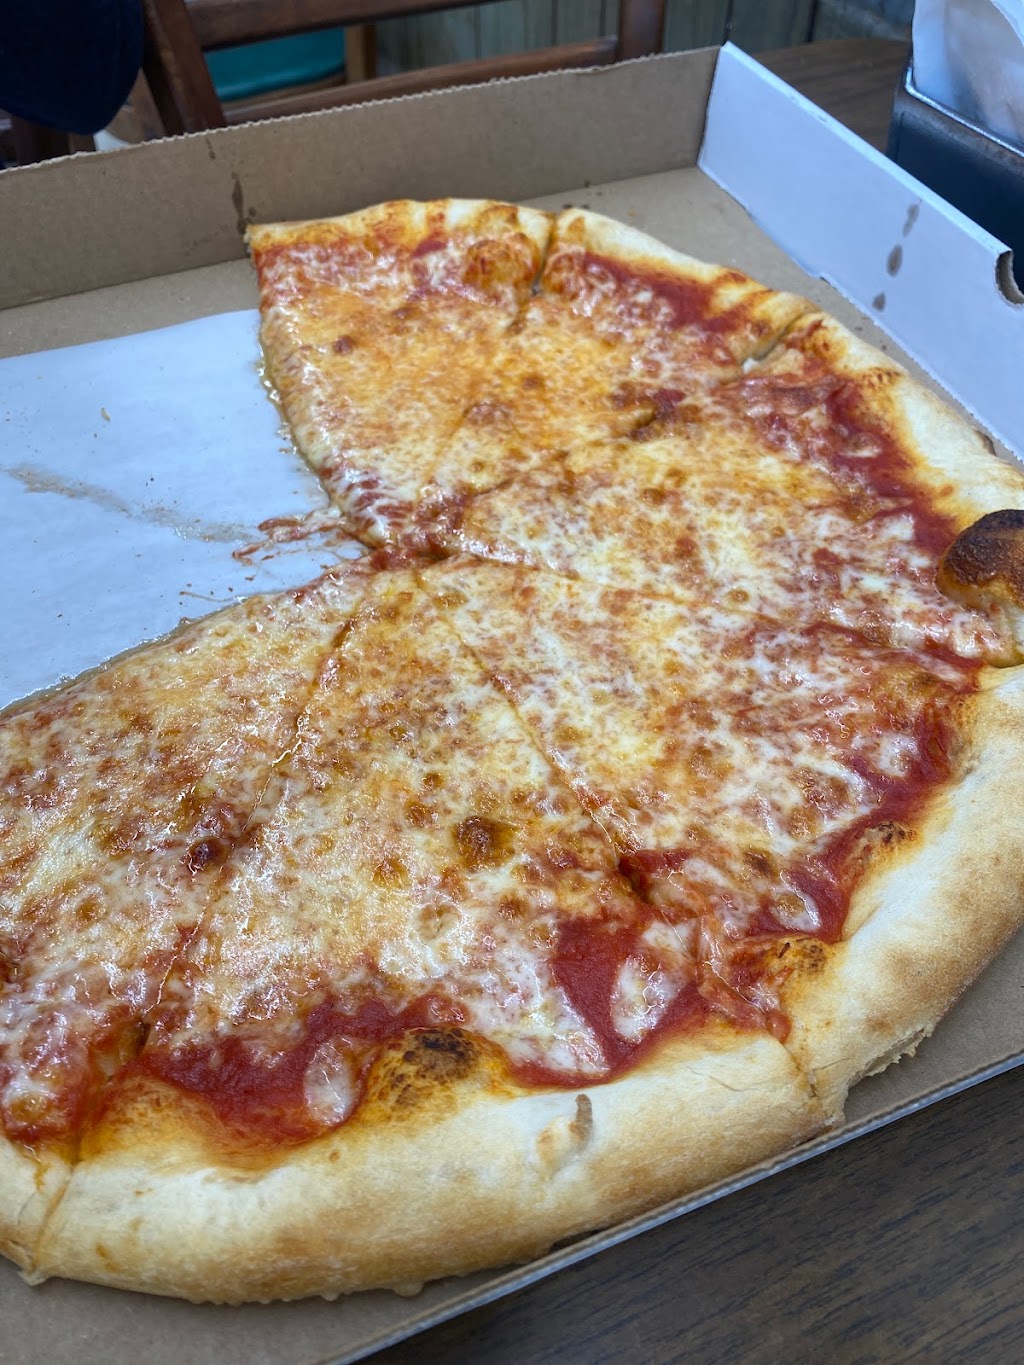 Topo Gigio Pizza | 984 Creek Rd, Bellmawr, NJ 08031 | Phone: (856) 931-6766